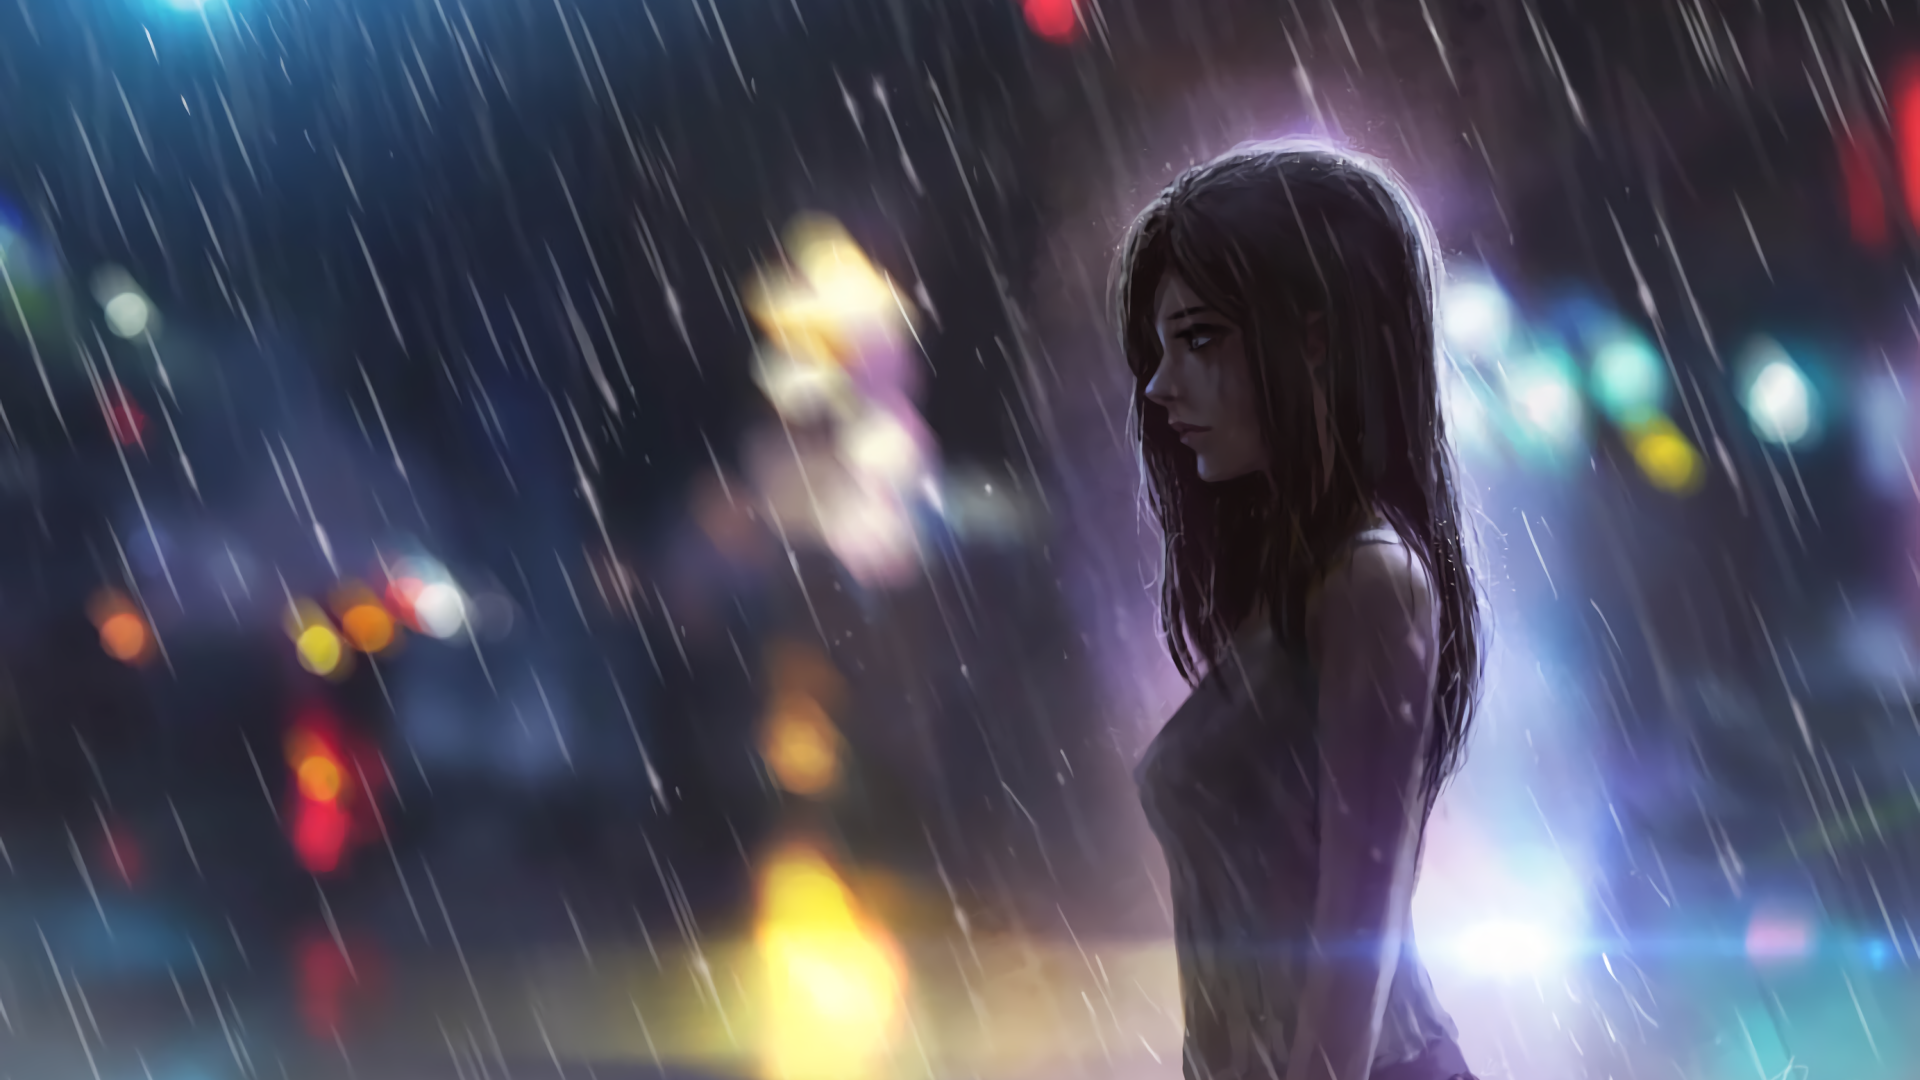 Desktop Wallpaper Rain, Girl, Enjoying Rain, Artwork, Hd Image, Picture,  Background, 7c6838